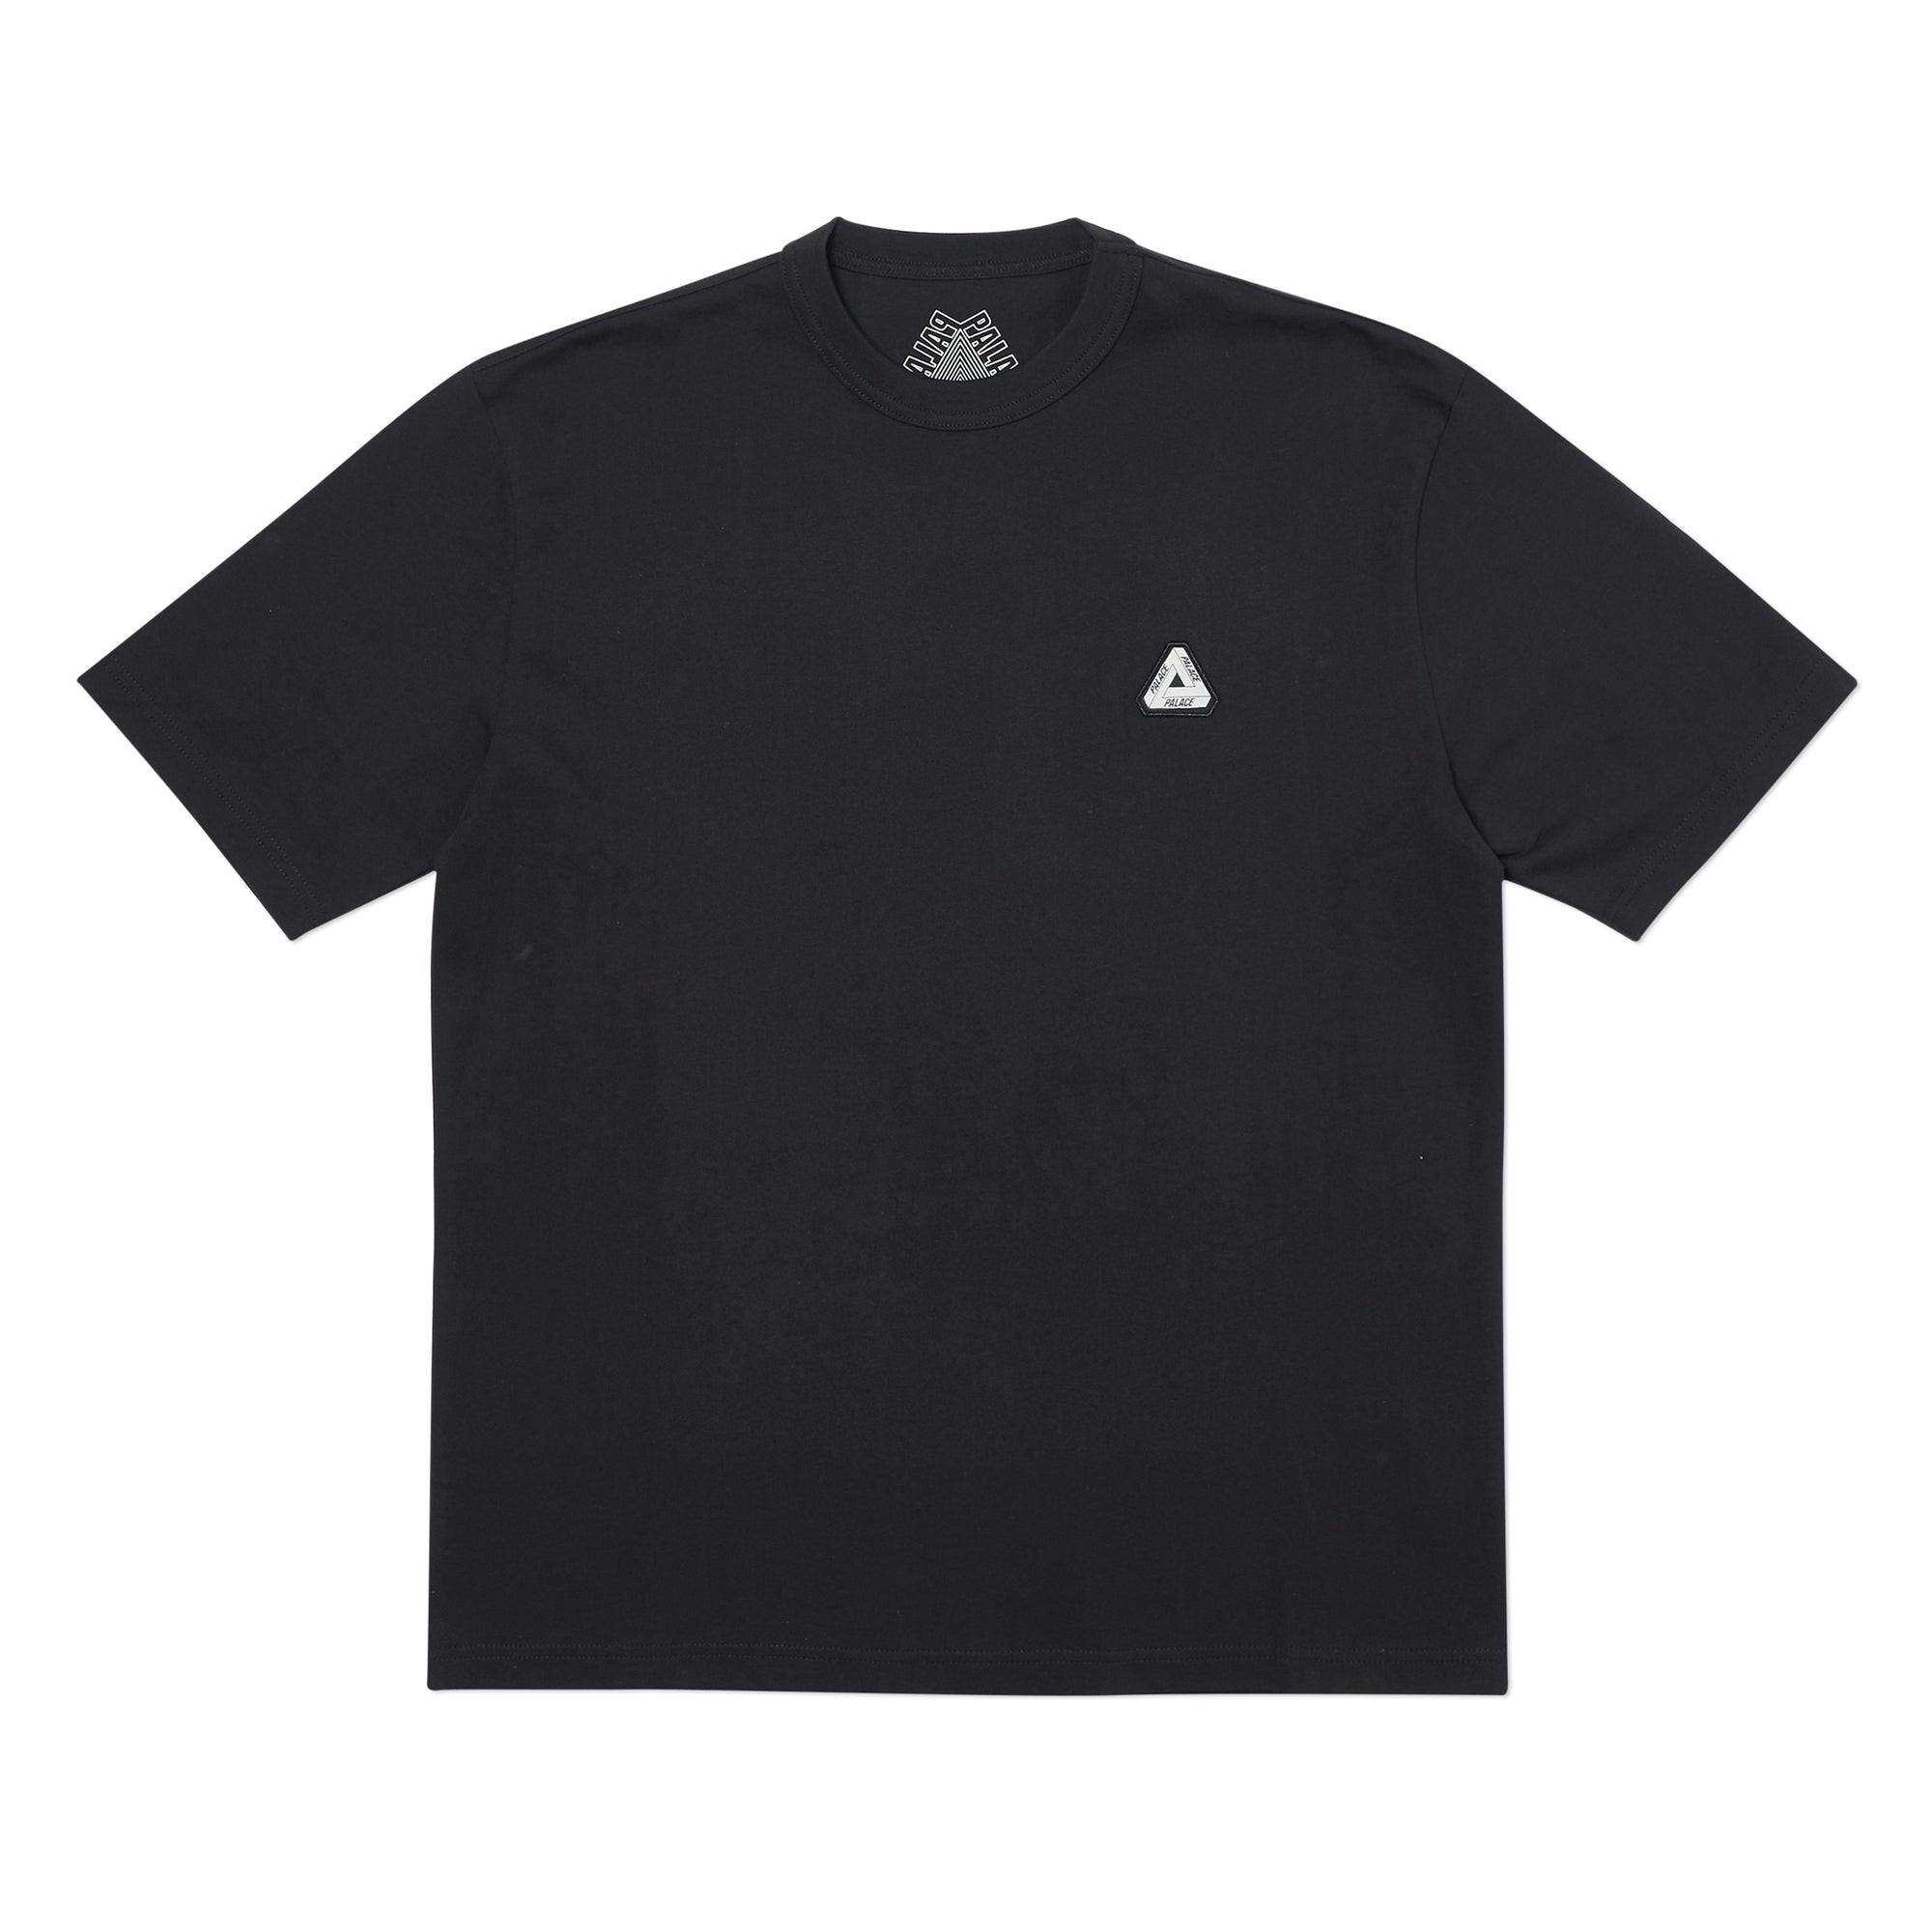 Palace - Men's Sofar T-Shirt - (Black) view 1